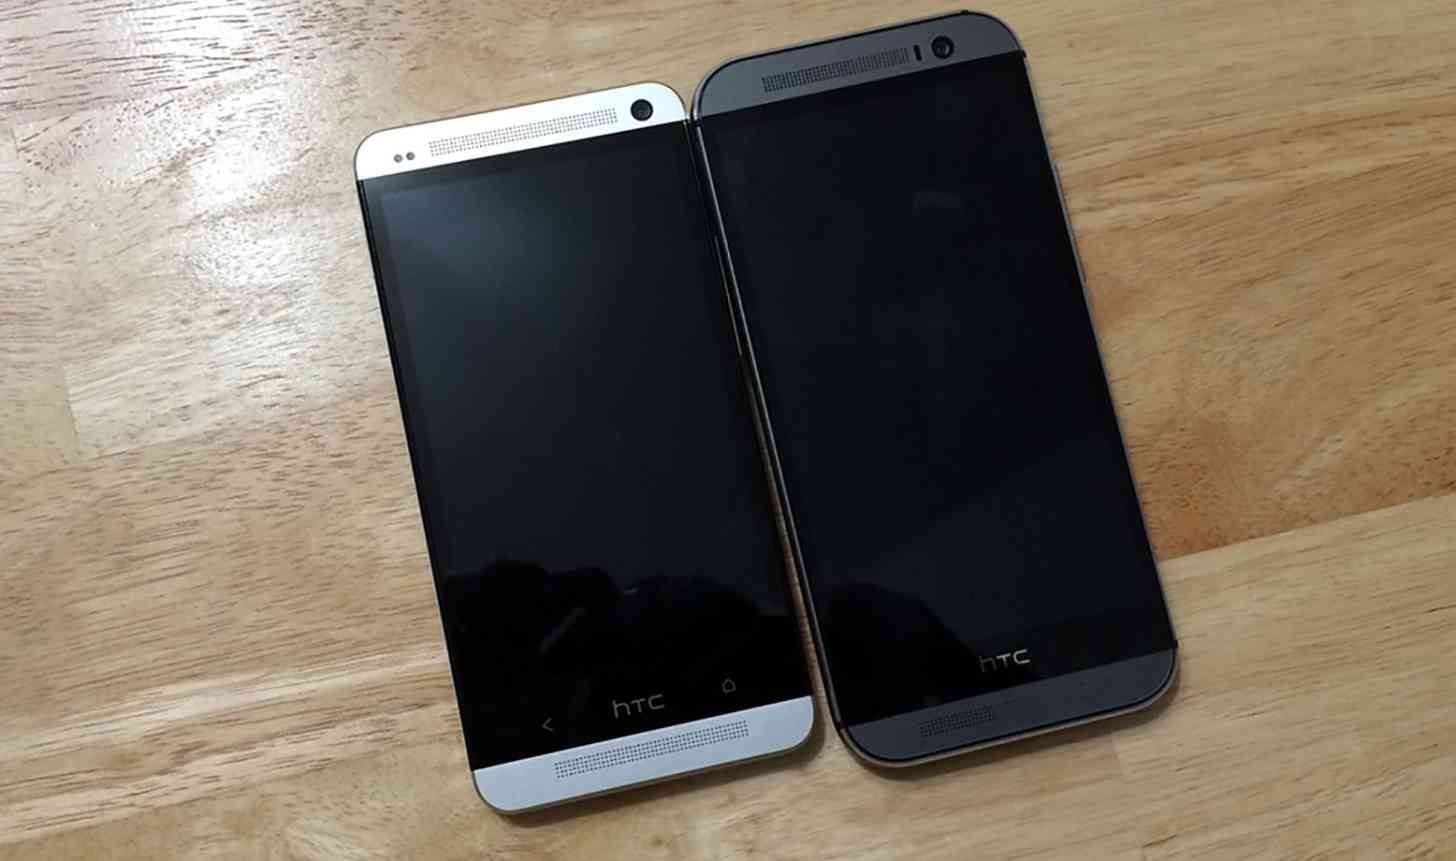 HTC One M7, One M8